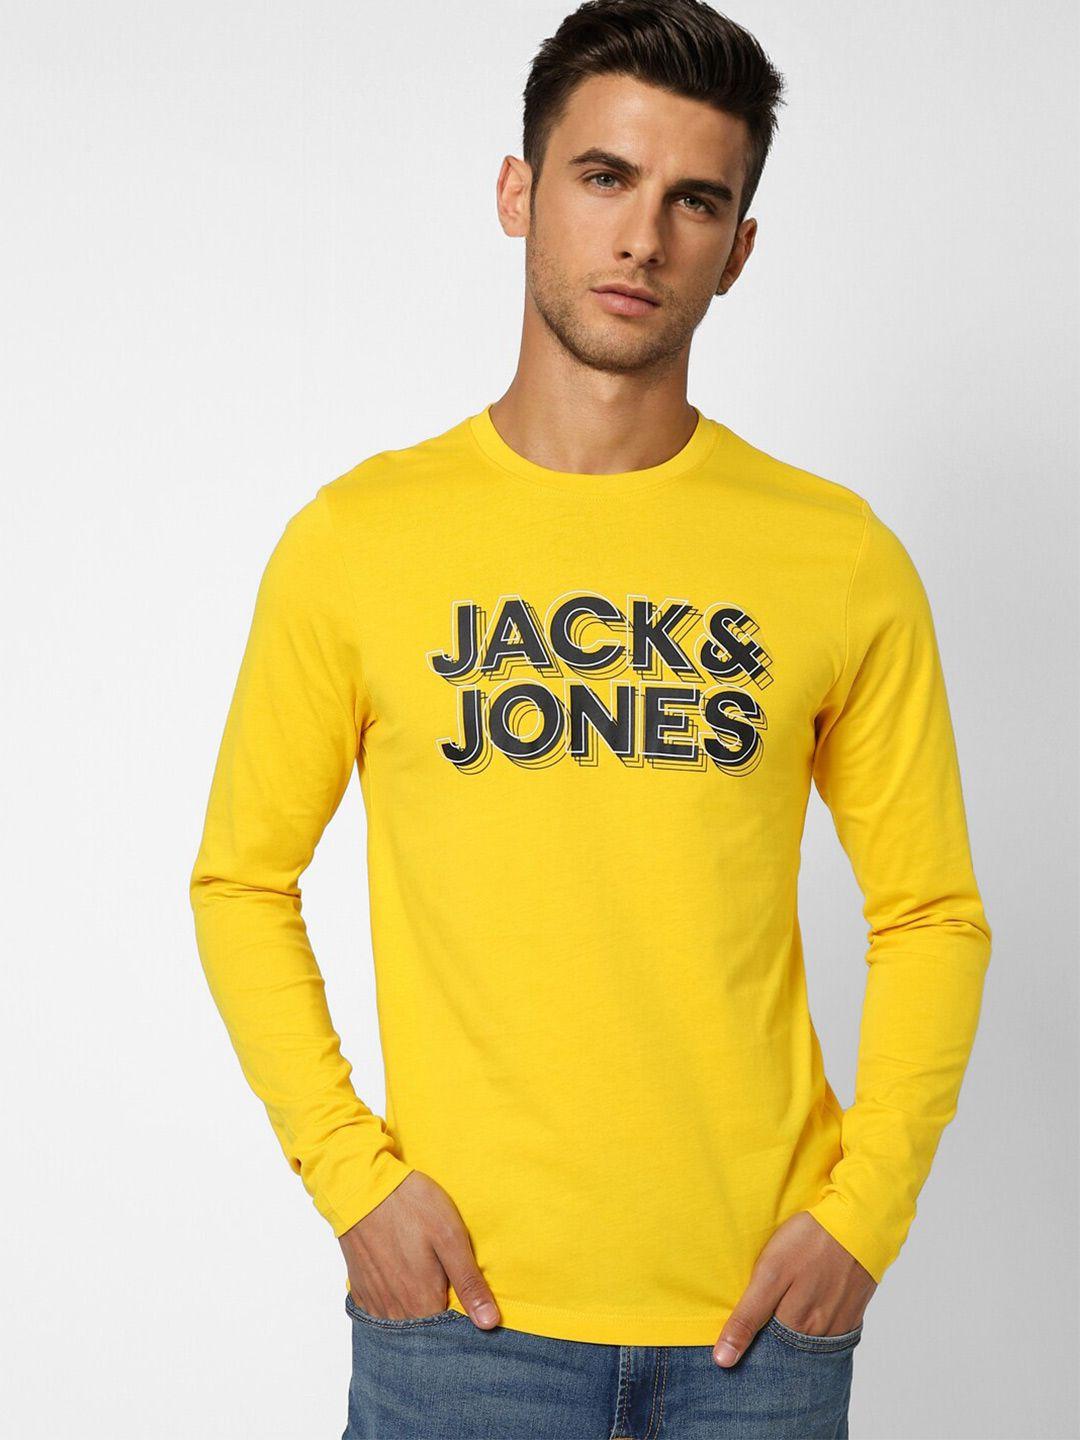 jack & jones men yellow typography printed t-shirt